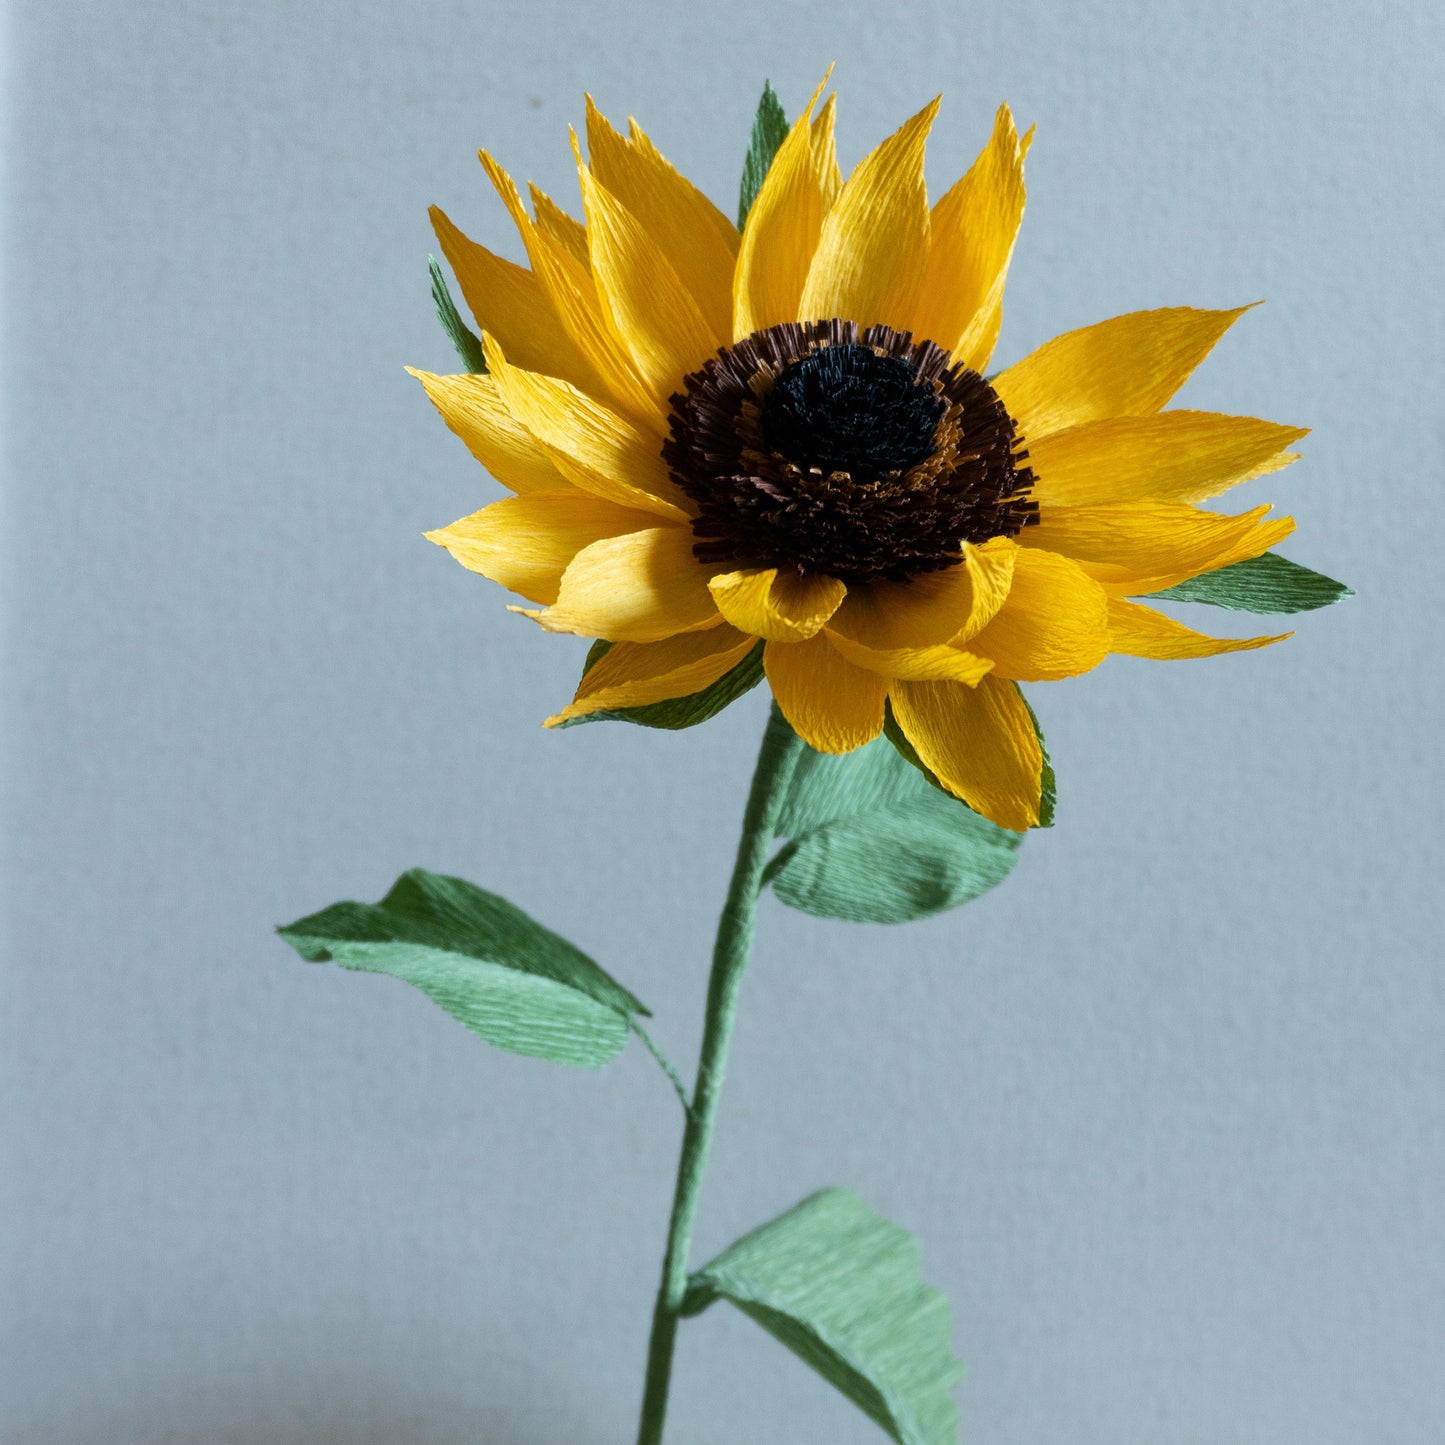 Sunflower stem